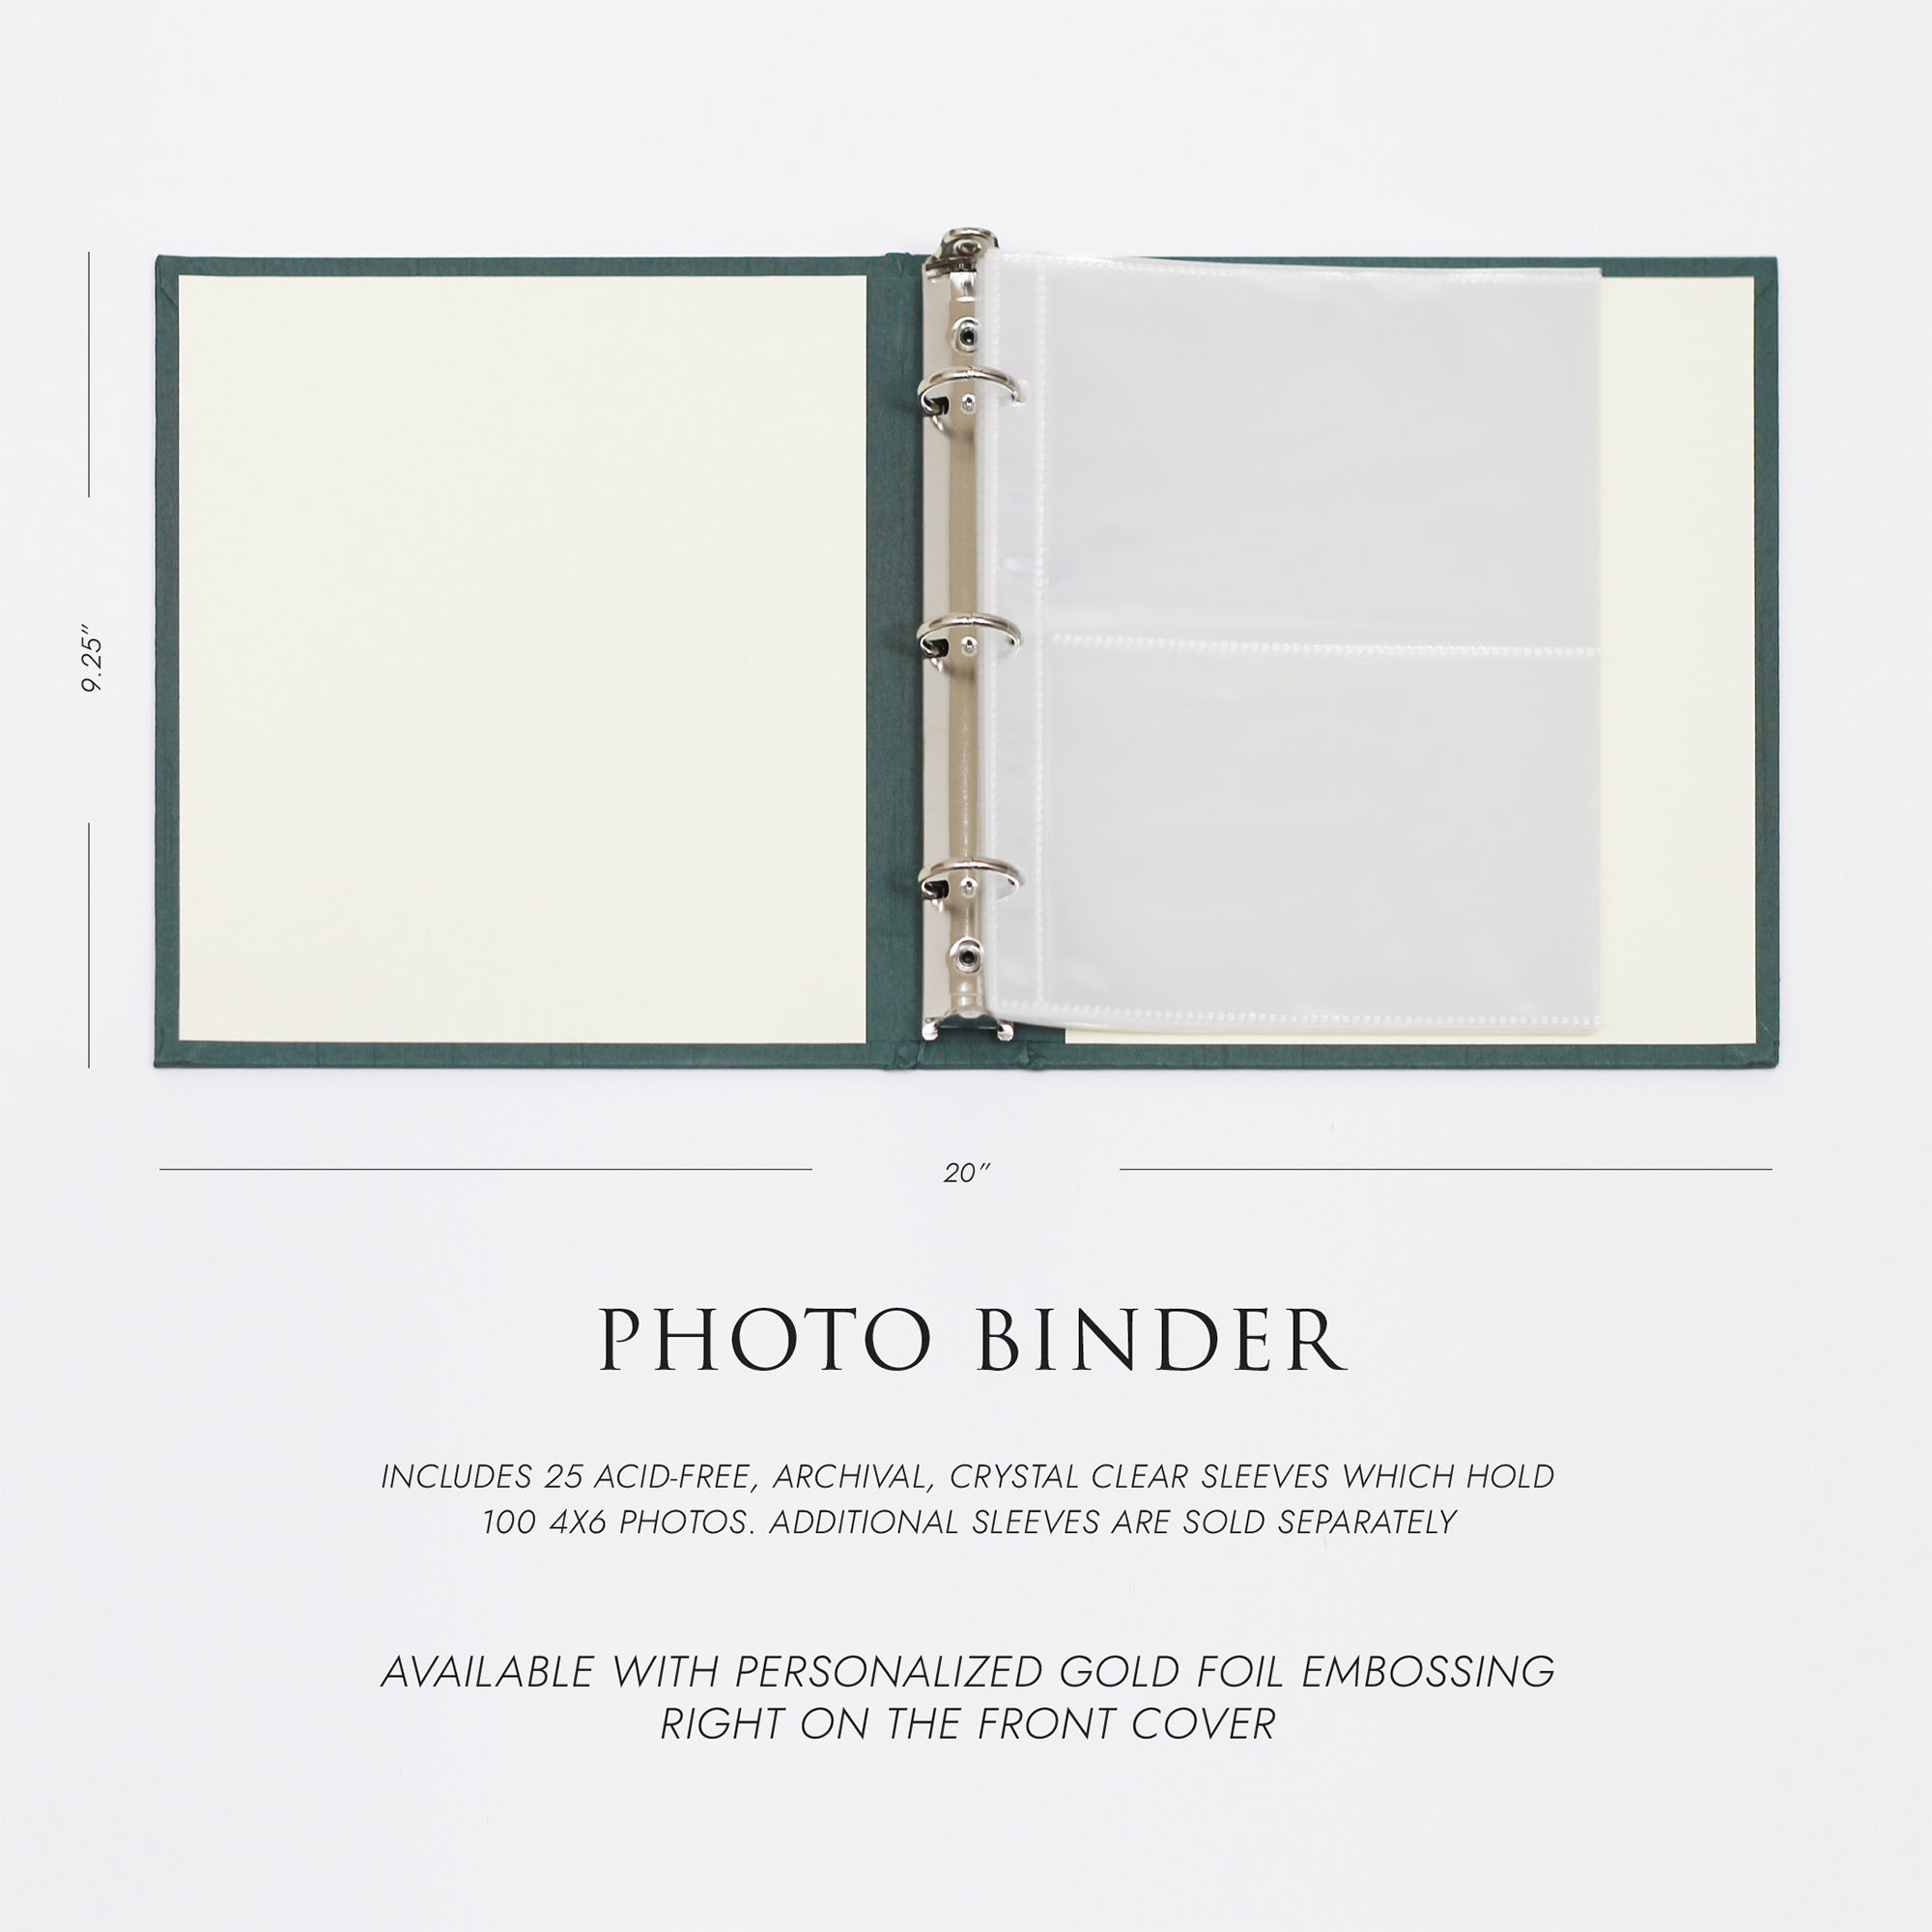 Personalised 6x4 Photo Album with Sleeves - Big Birthday 